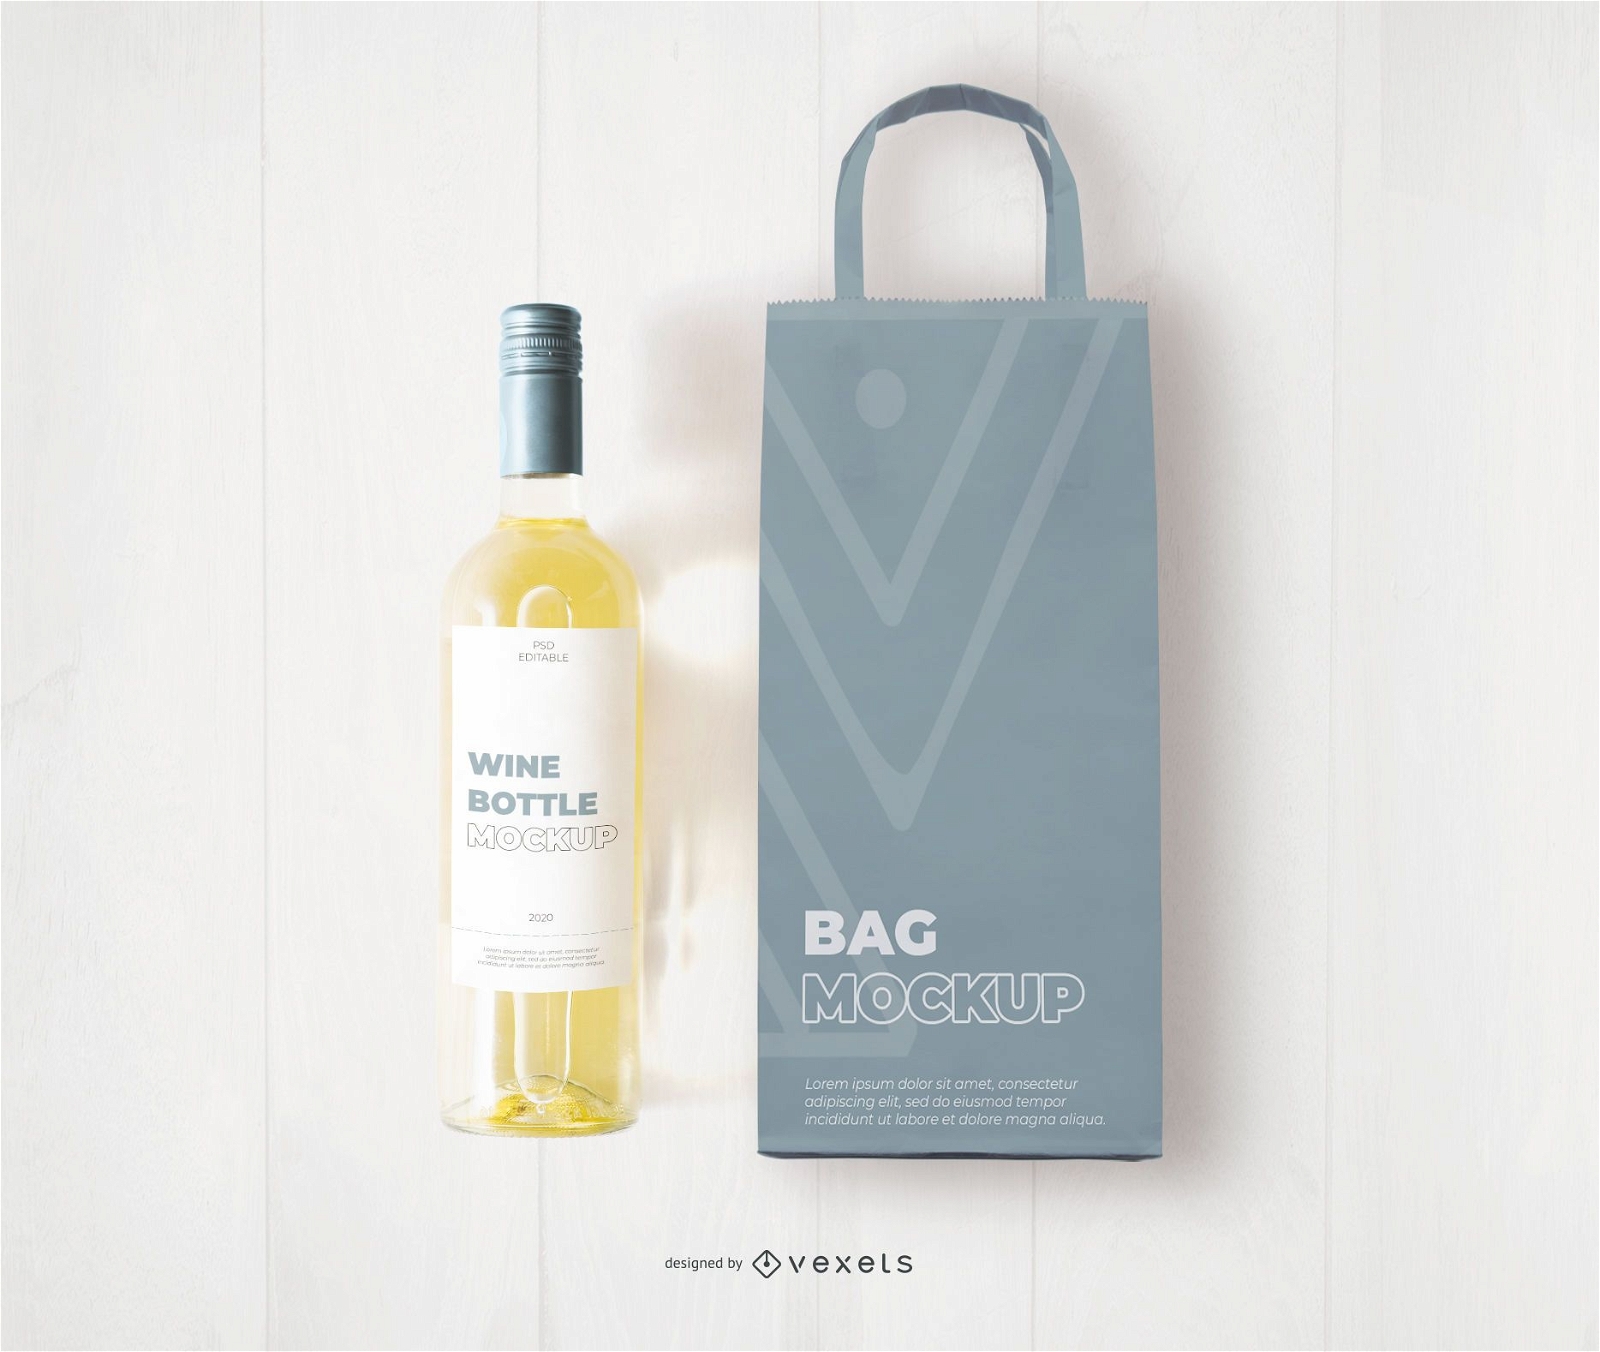 White wine bag and bottle mockup